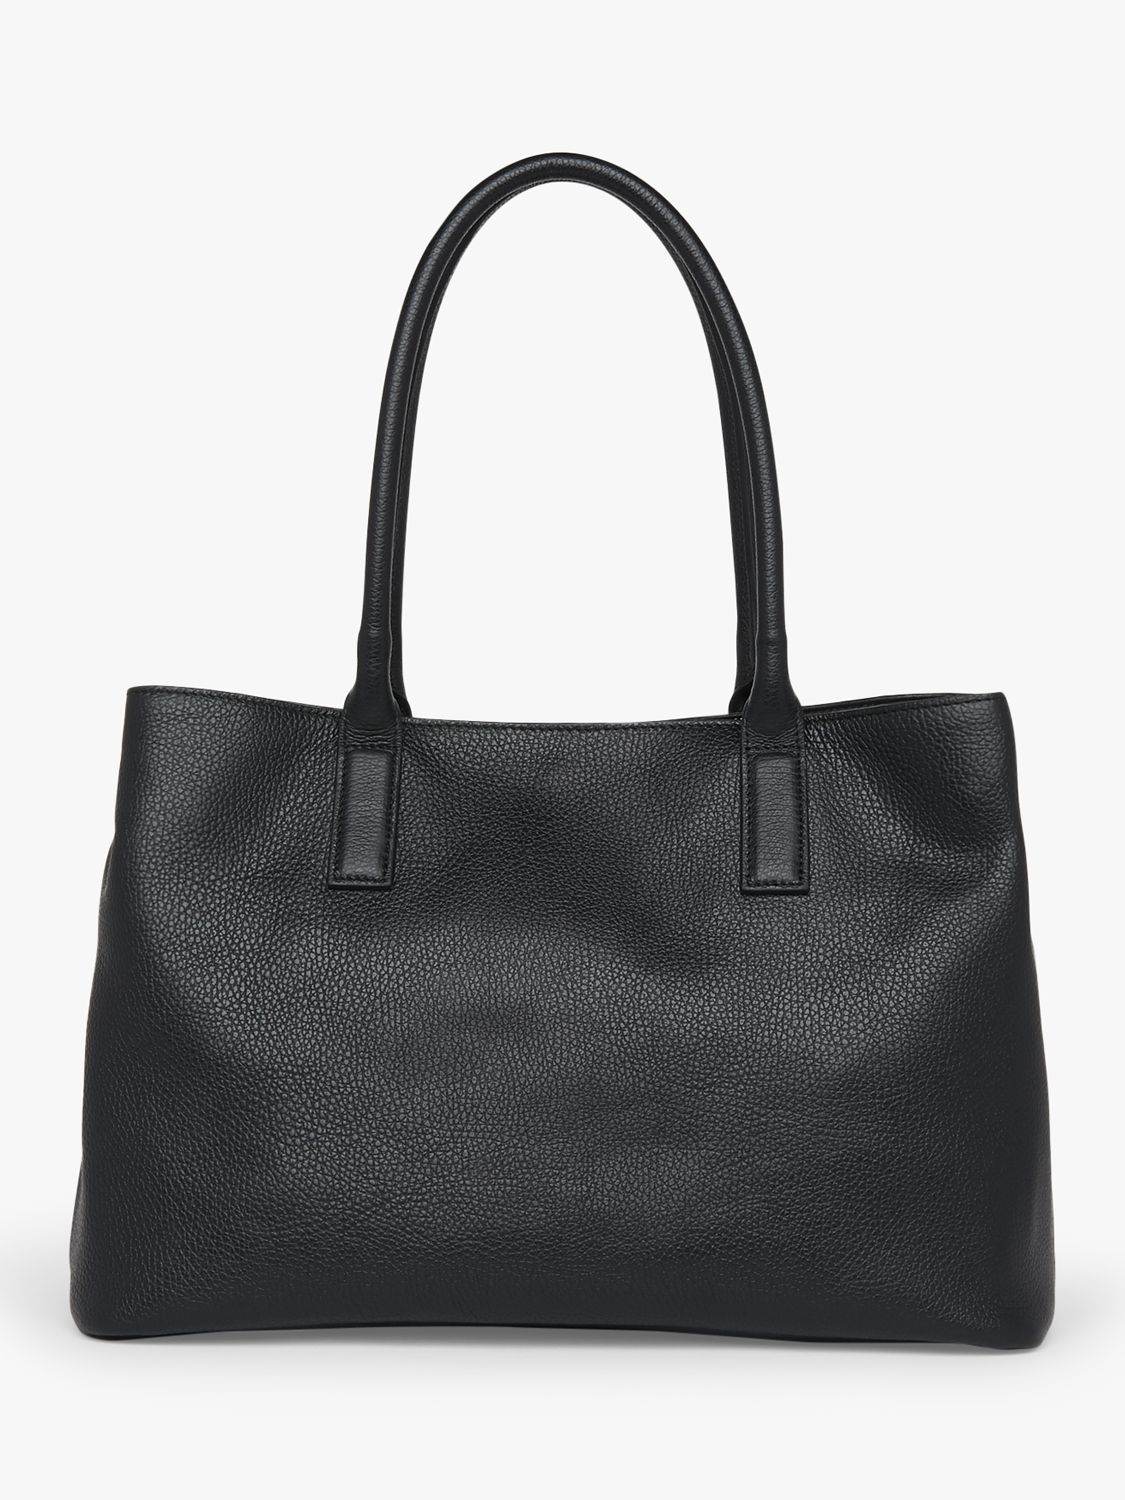 L.K.Bennett Lilian Leather Tote Bag, Black at John Lewis & Partners